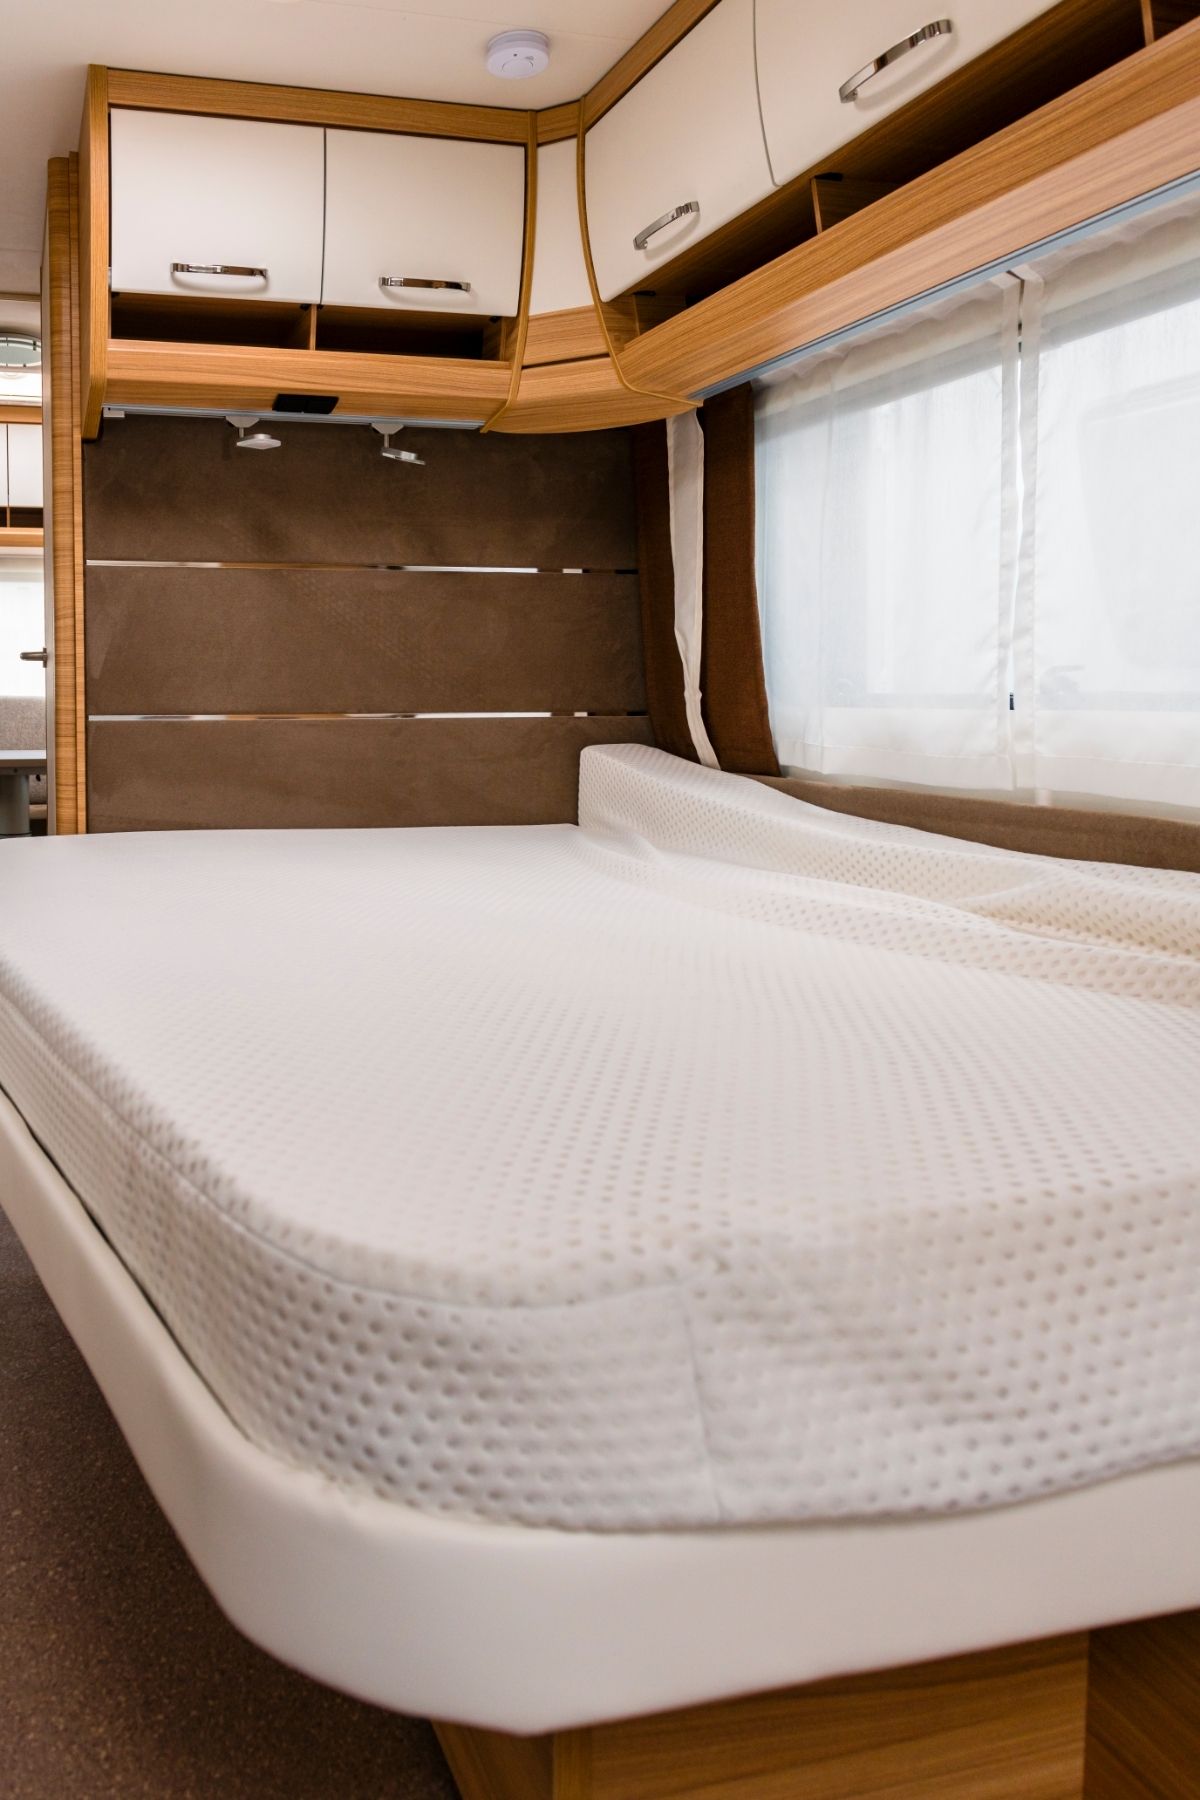 Bed and storage in a camper van